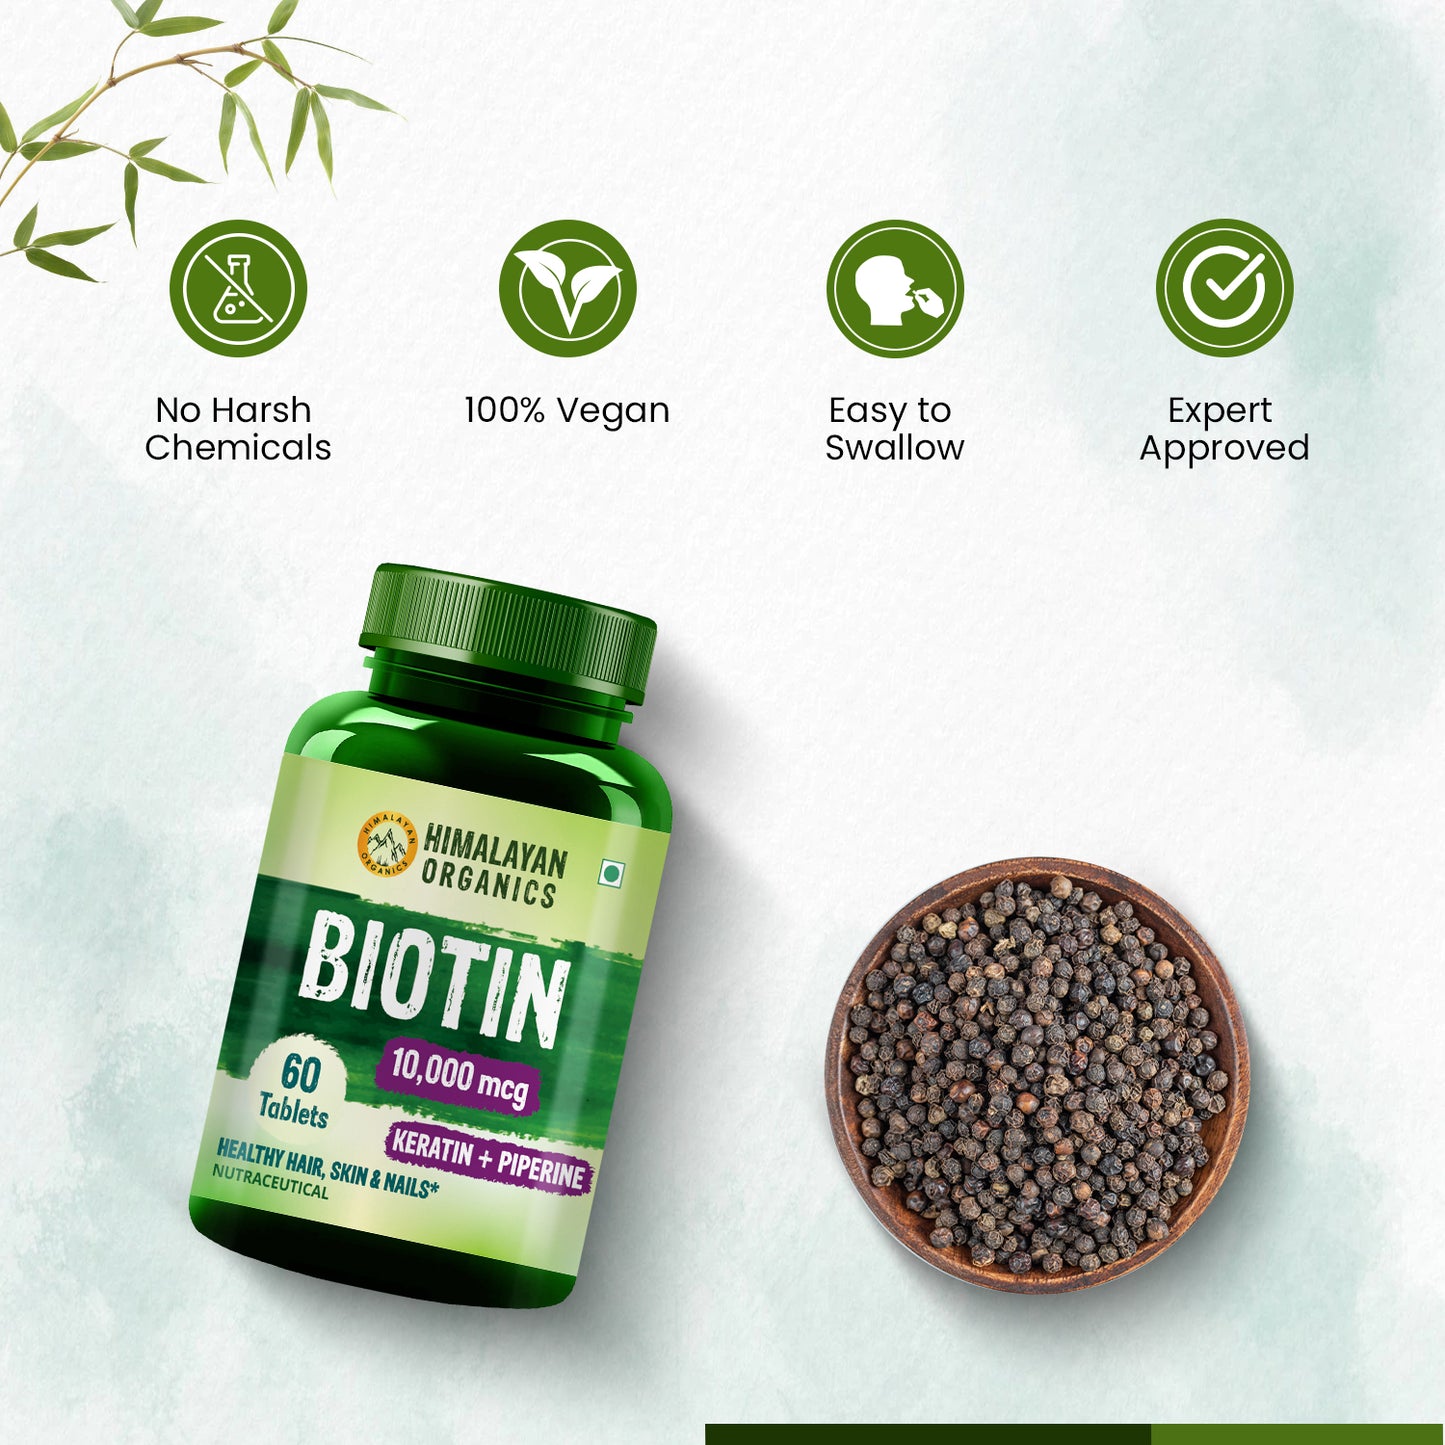 Himalayan Organics Biotin 10000mcg with Keratin + Piperine Supplement For Healthy Hair, Skin & Nails - 60 Veg Tablets